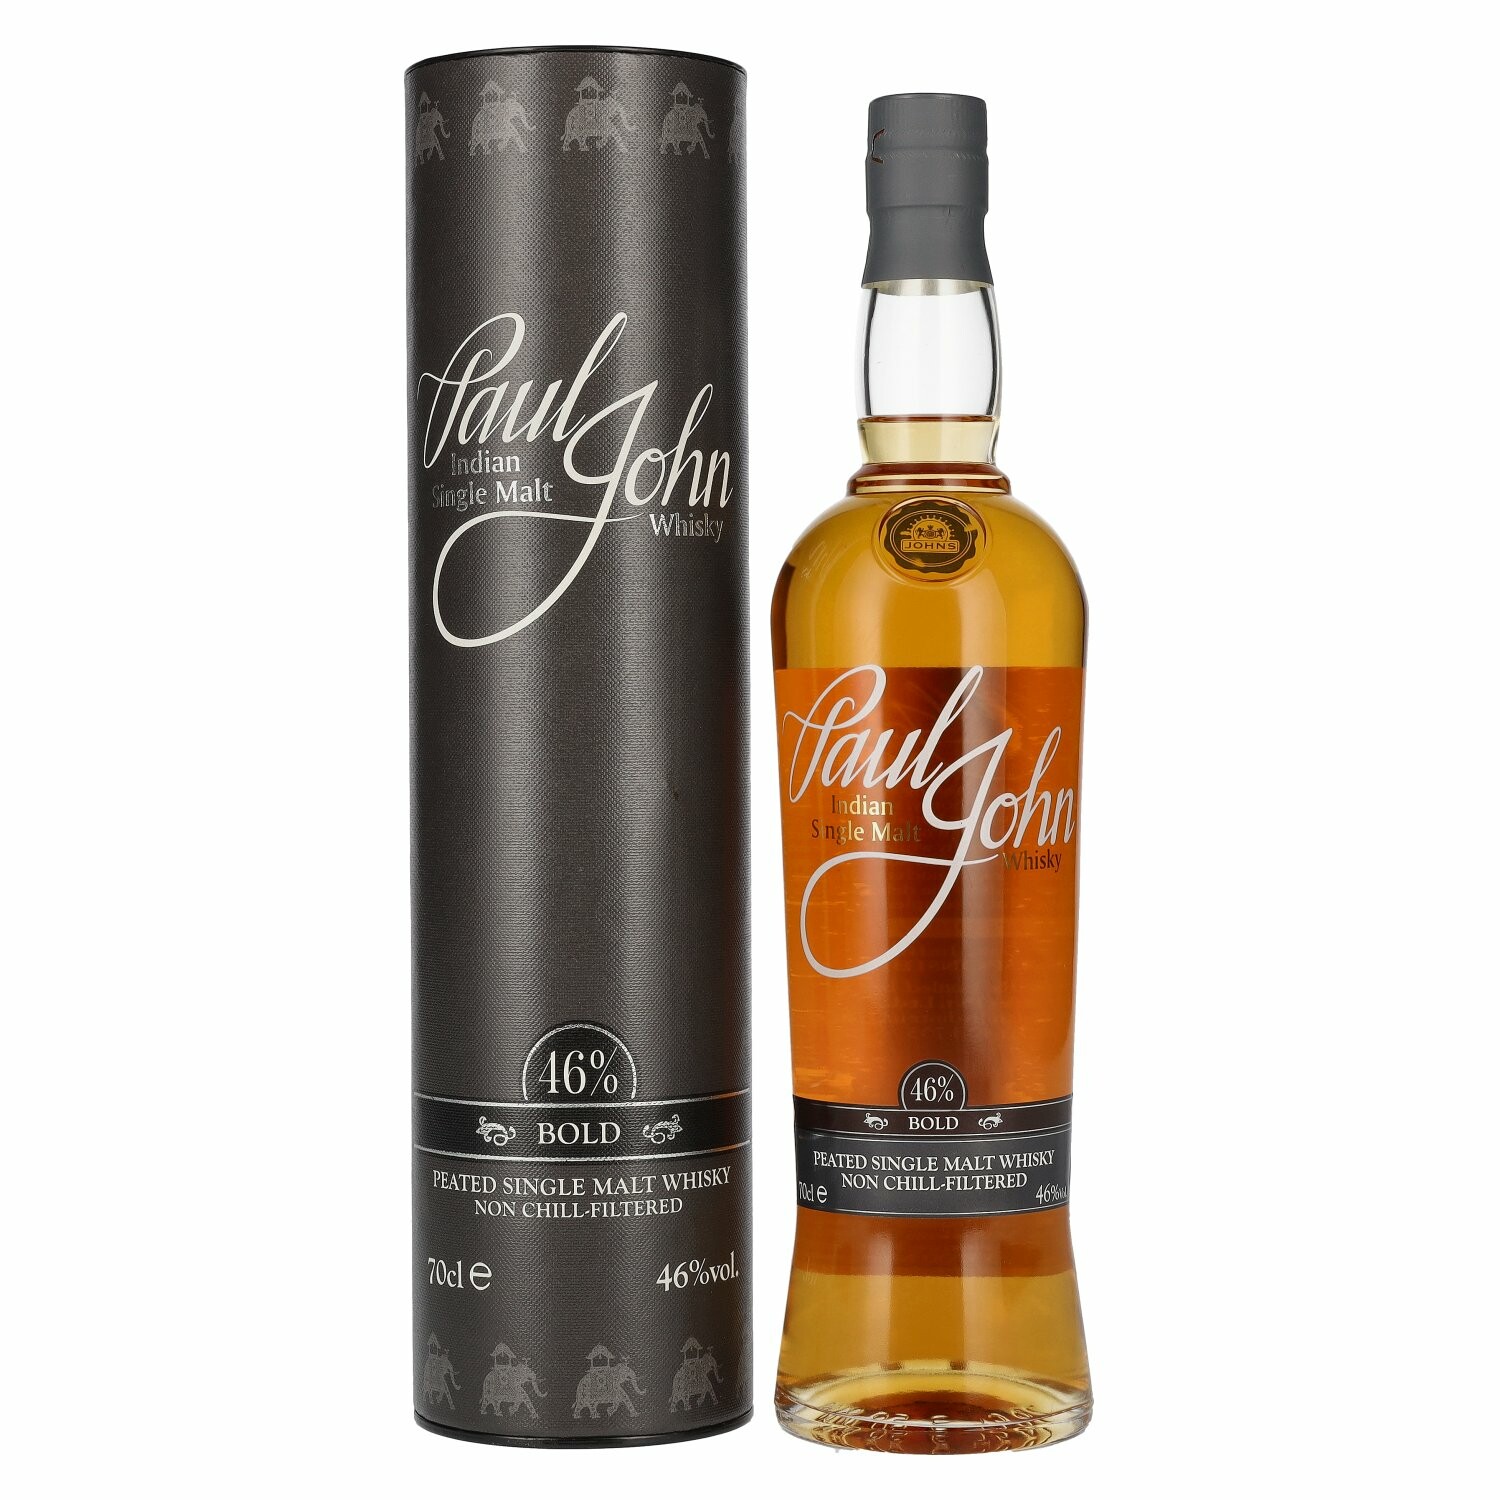 Paul John BOLD Peated Indian Single Malt Whisky 46% Vol. 0,7l in Giftbox